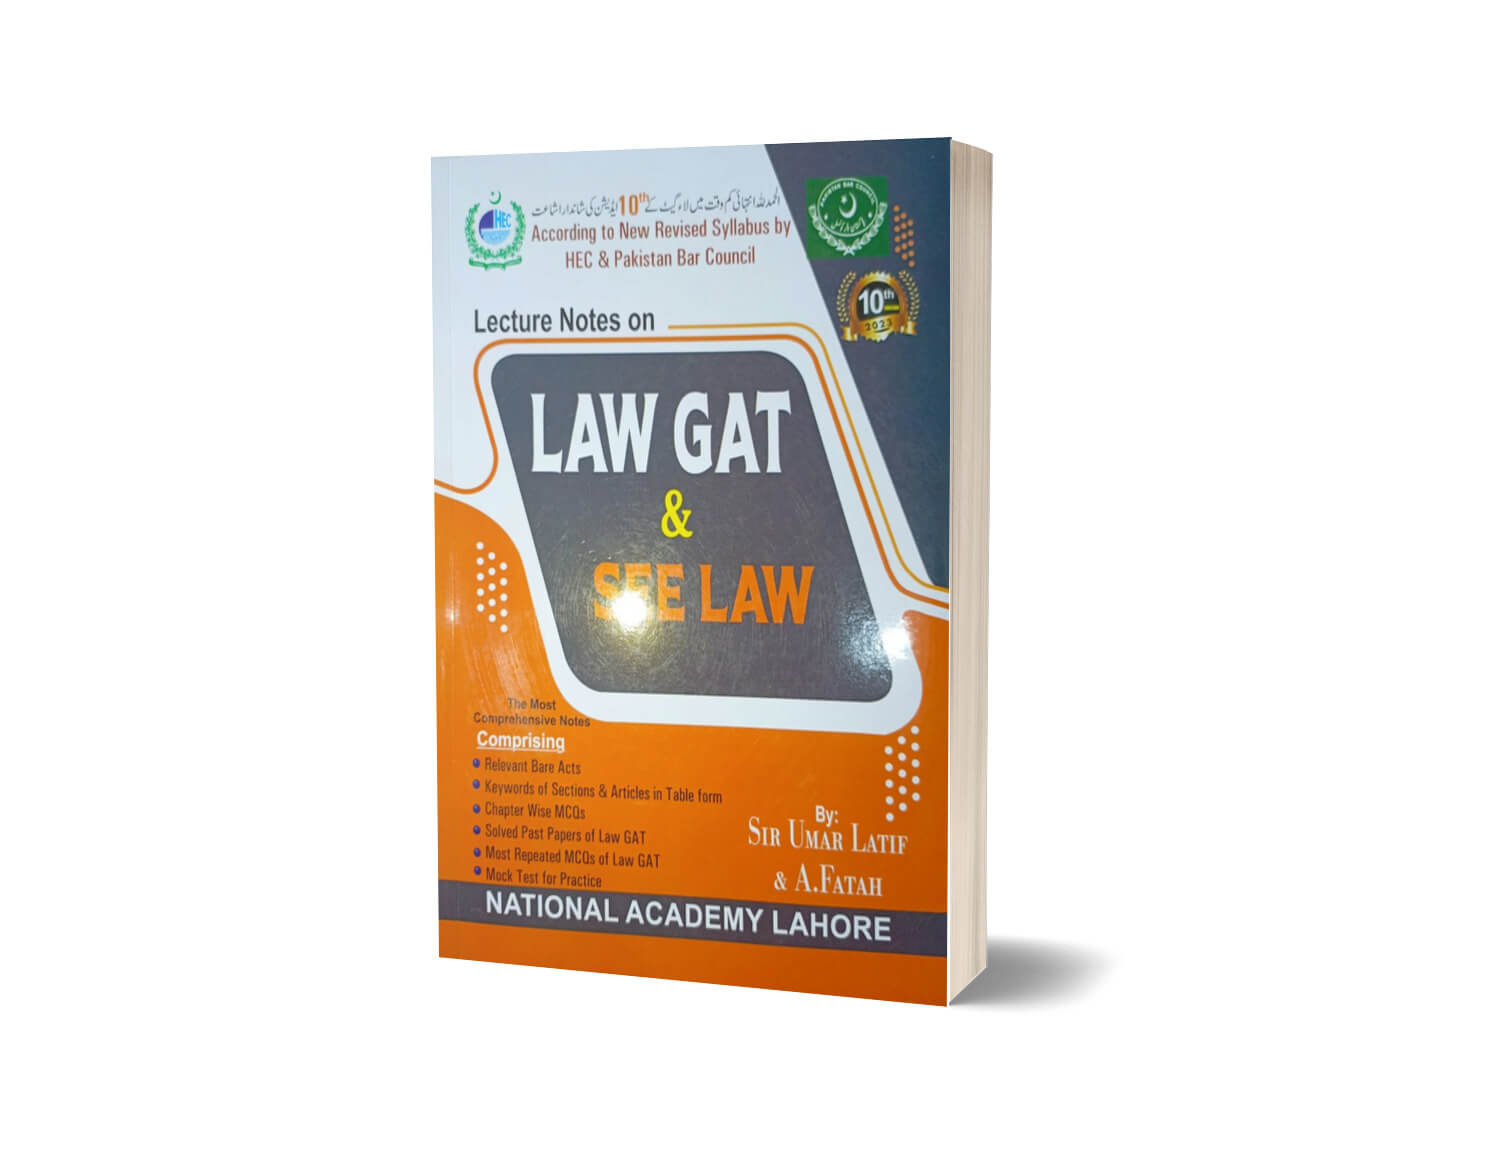 Law Gat By Sir Umar Latif & A. Fatah- Nation Academy Lahore